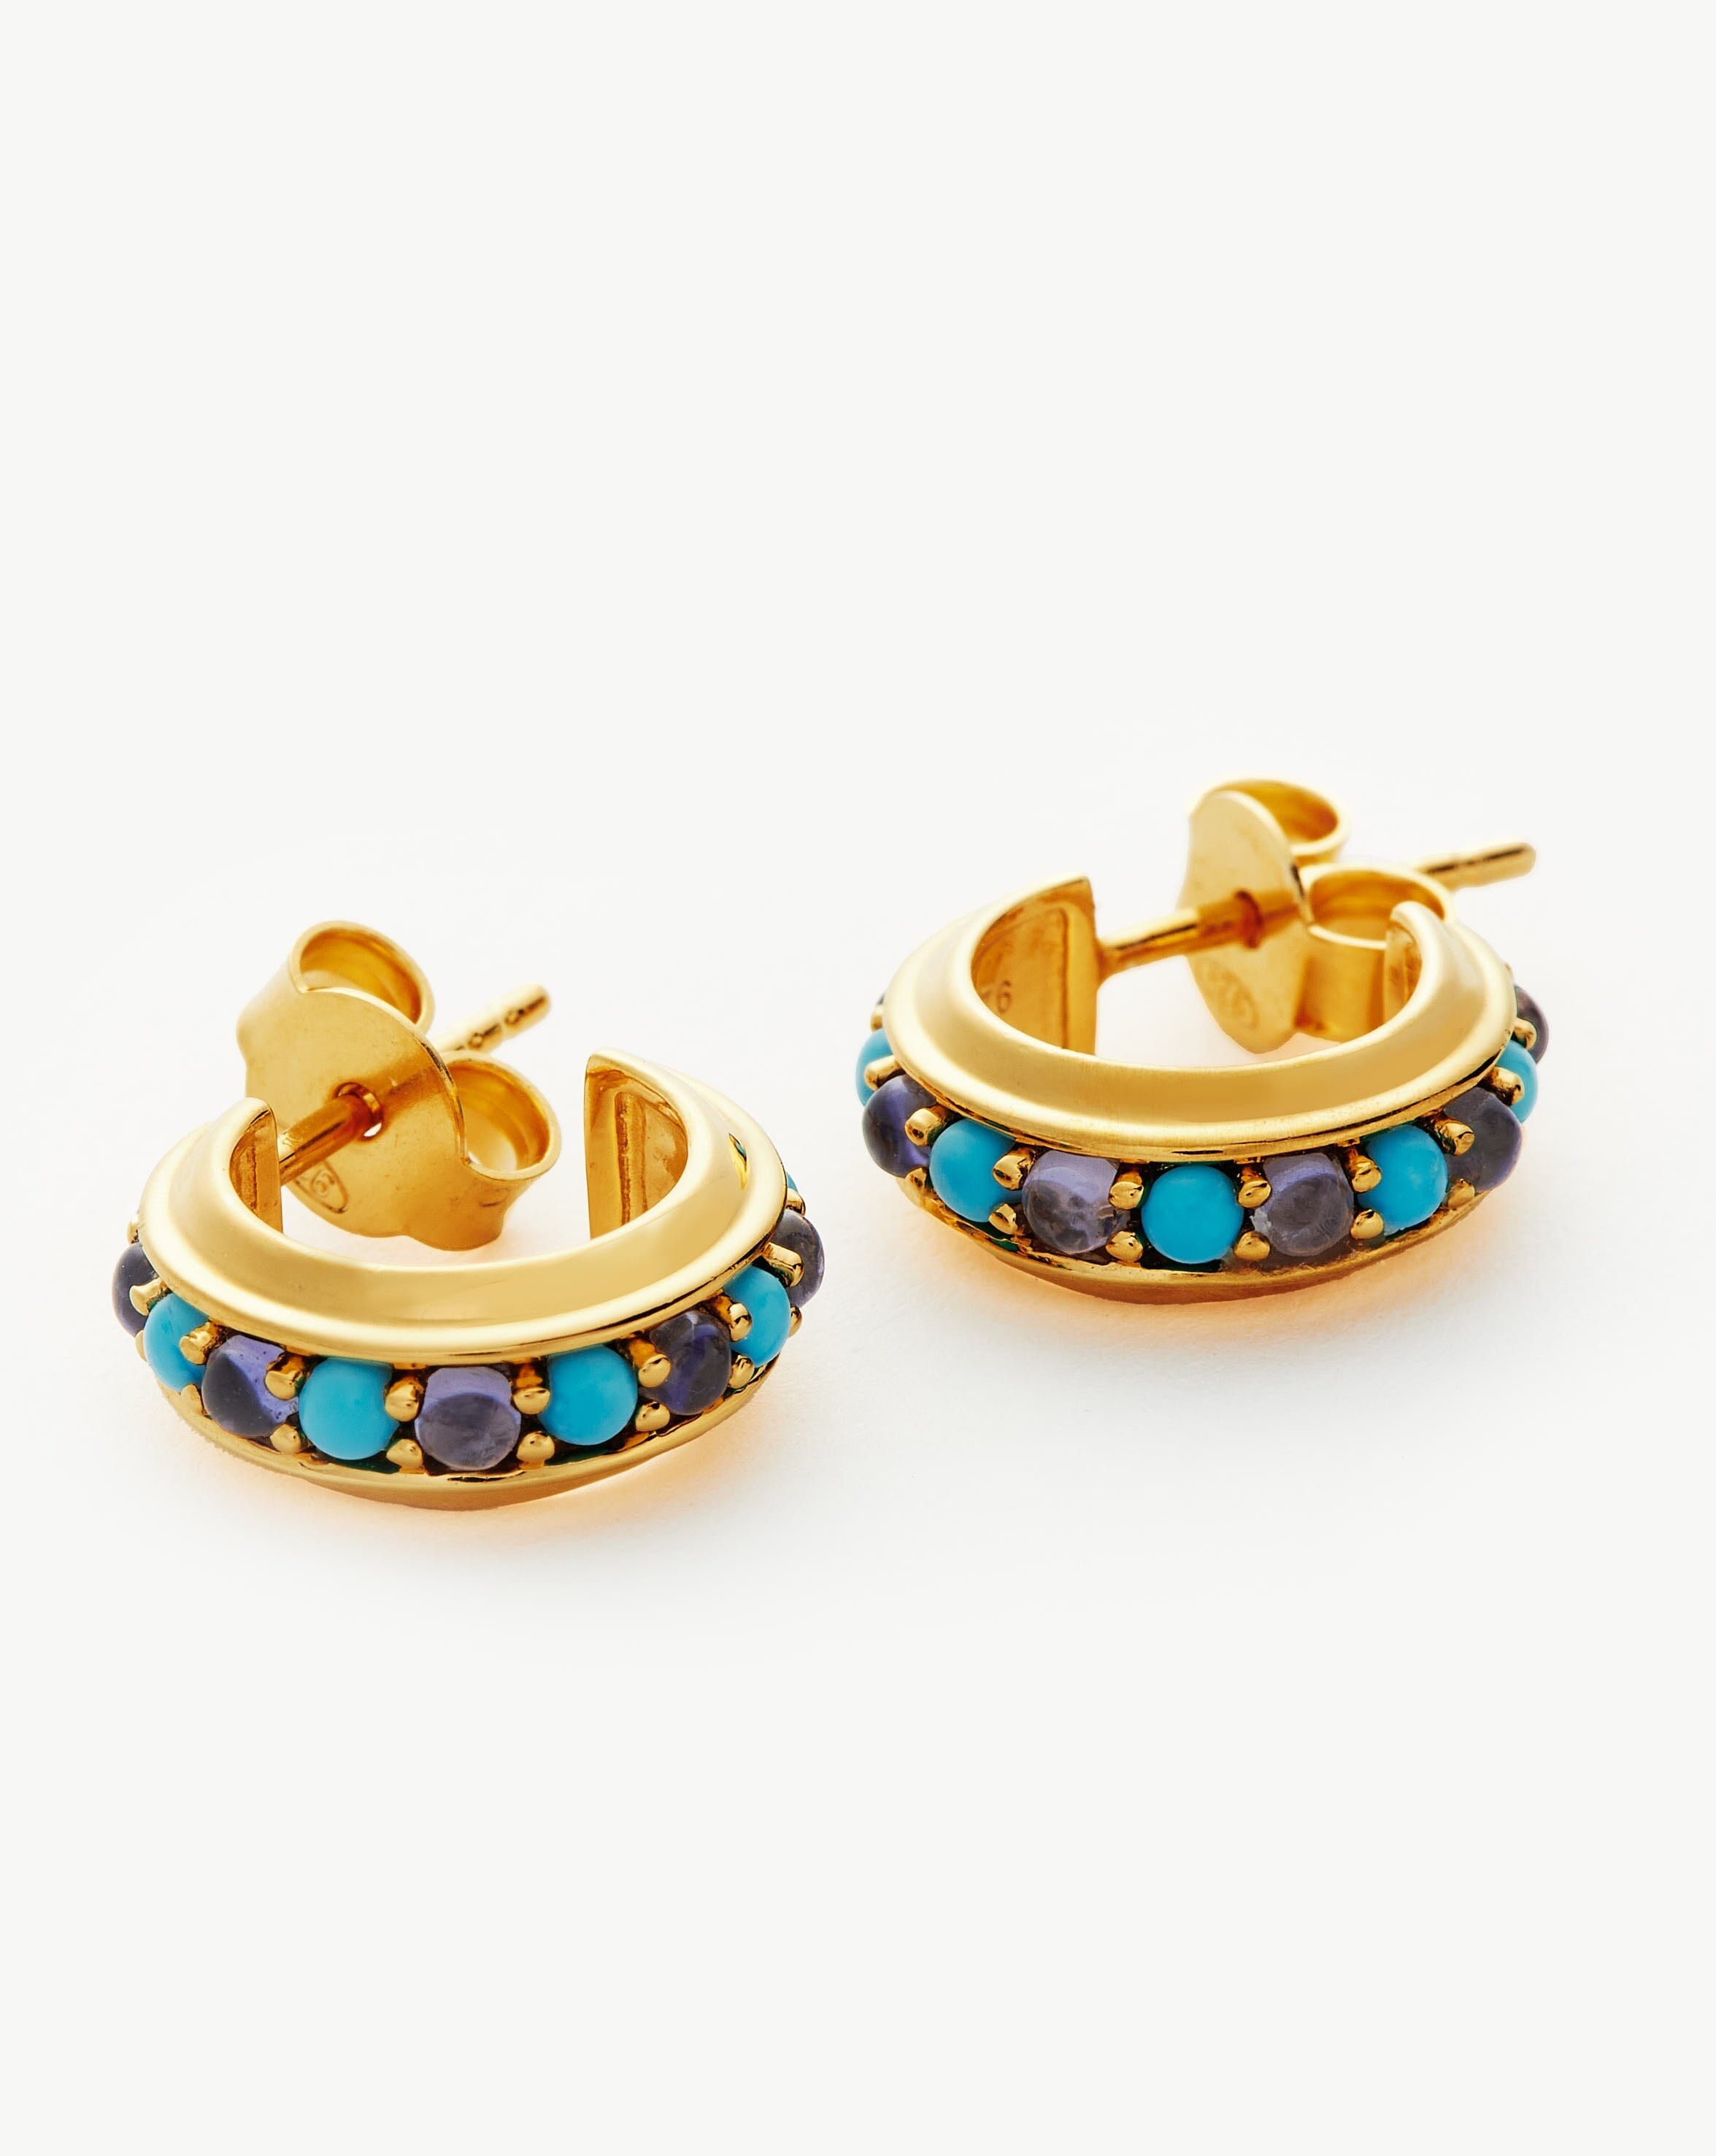 kshmir Women's earrings retro natural pearls irregular earring C-shaped girl  earrings go with jewelry accessories gifts